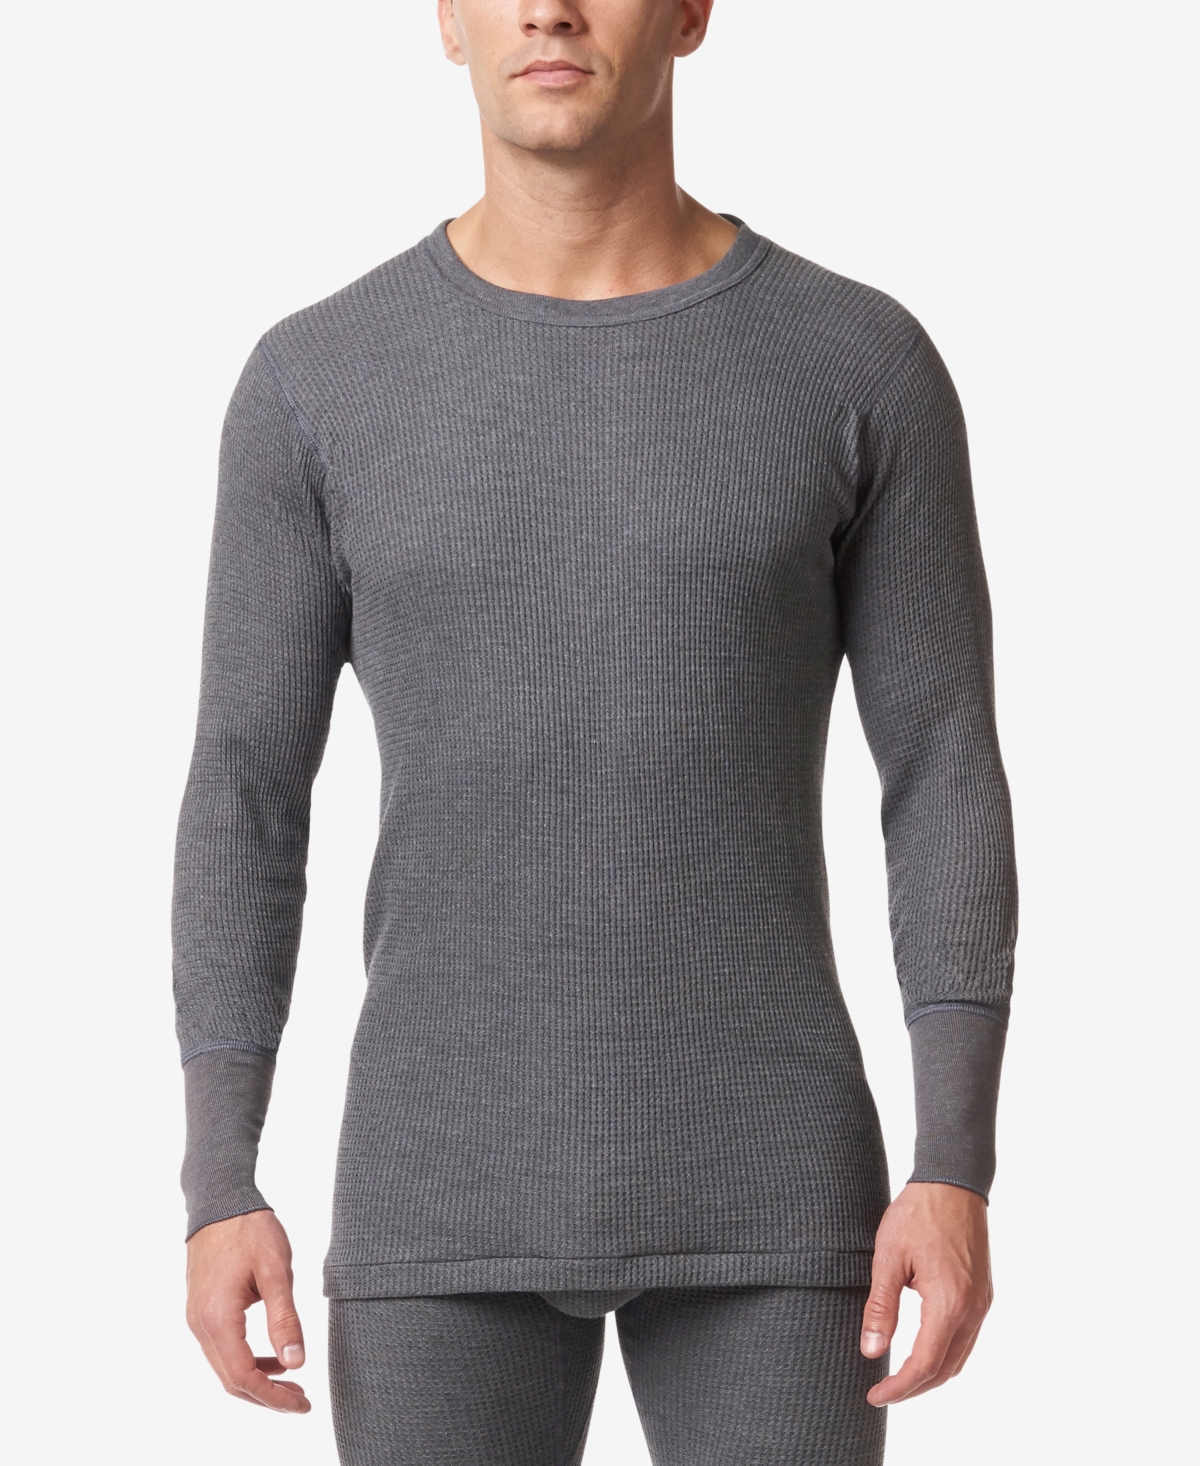 Men's Waffle Knit Thermal Long Undershirt - Charcoal Mix